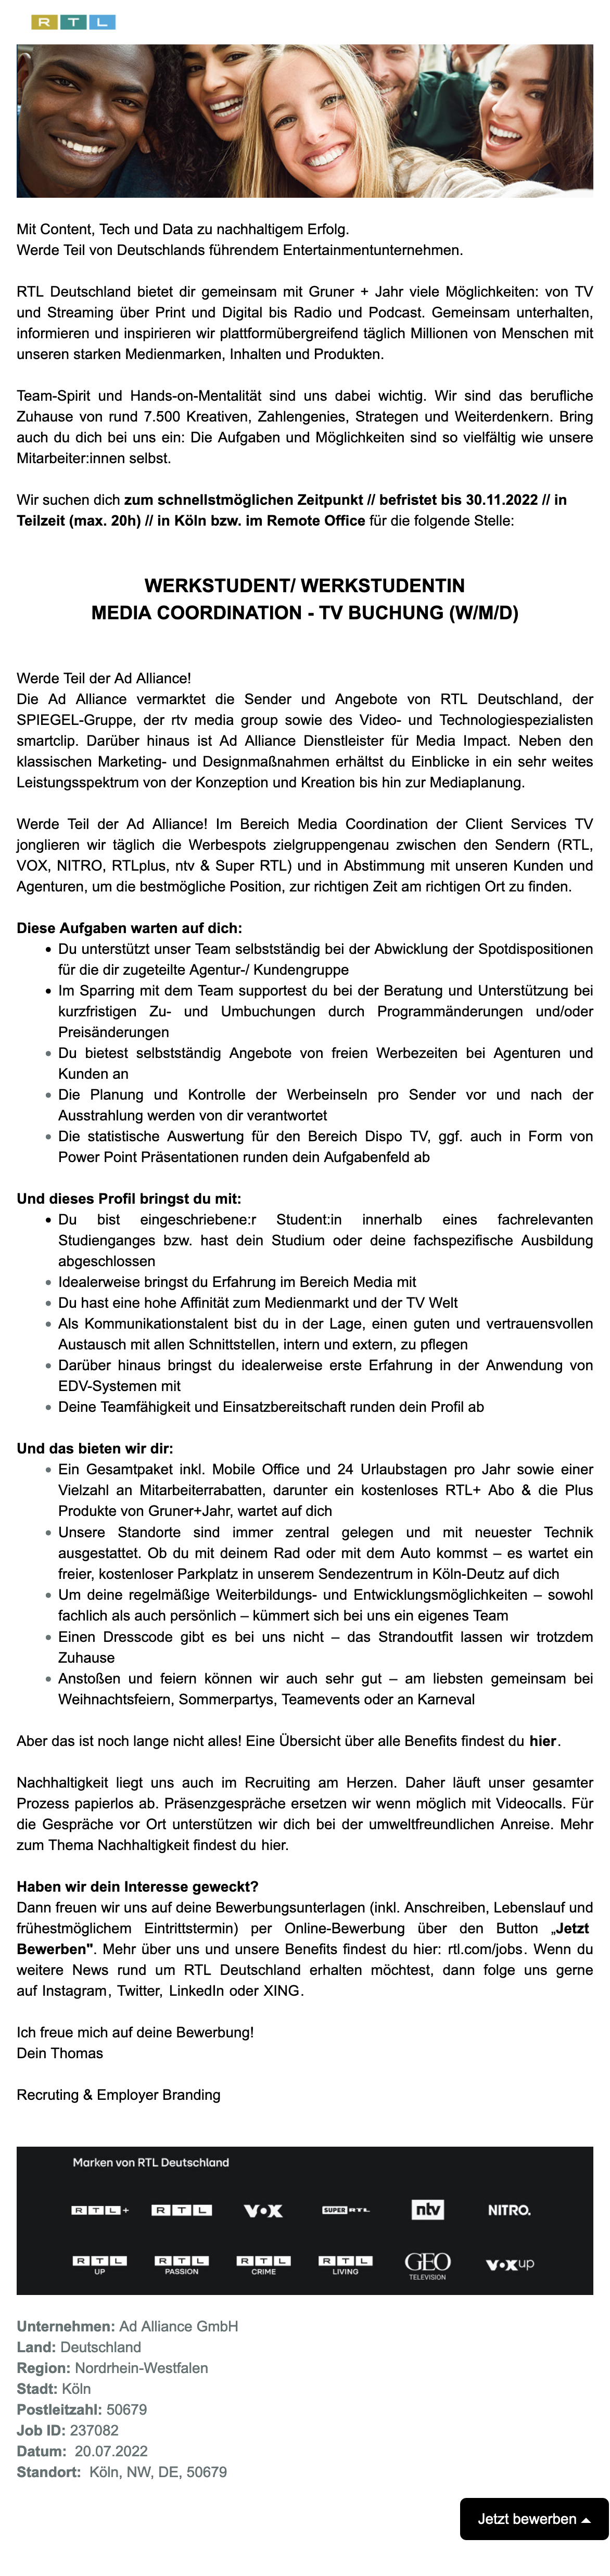 Werkstudent Media Coordination - TV Buchung (w/m/d)(Ad Alliance)